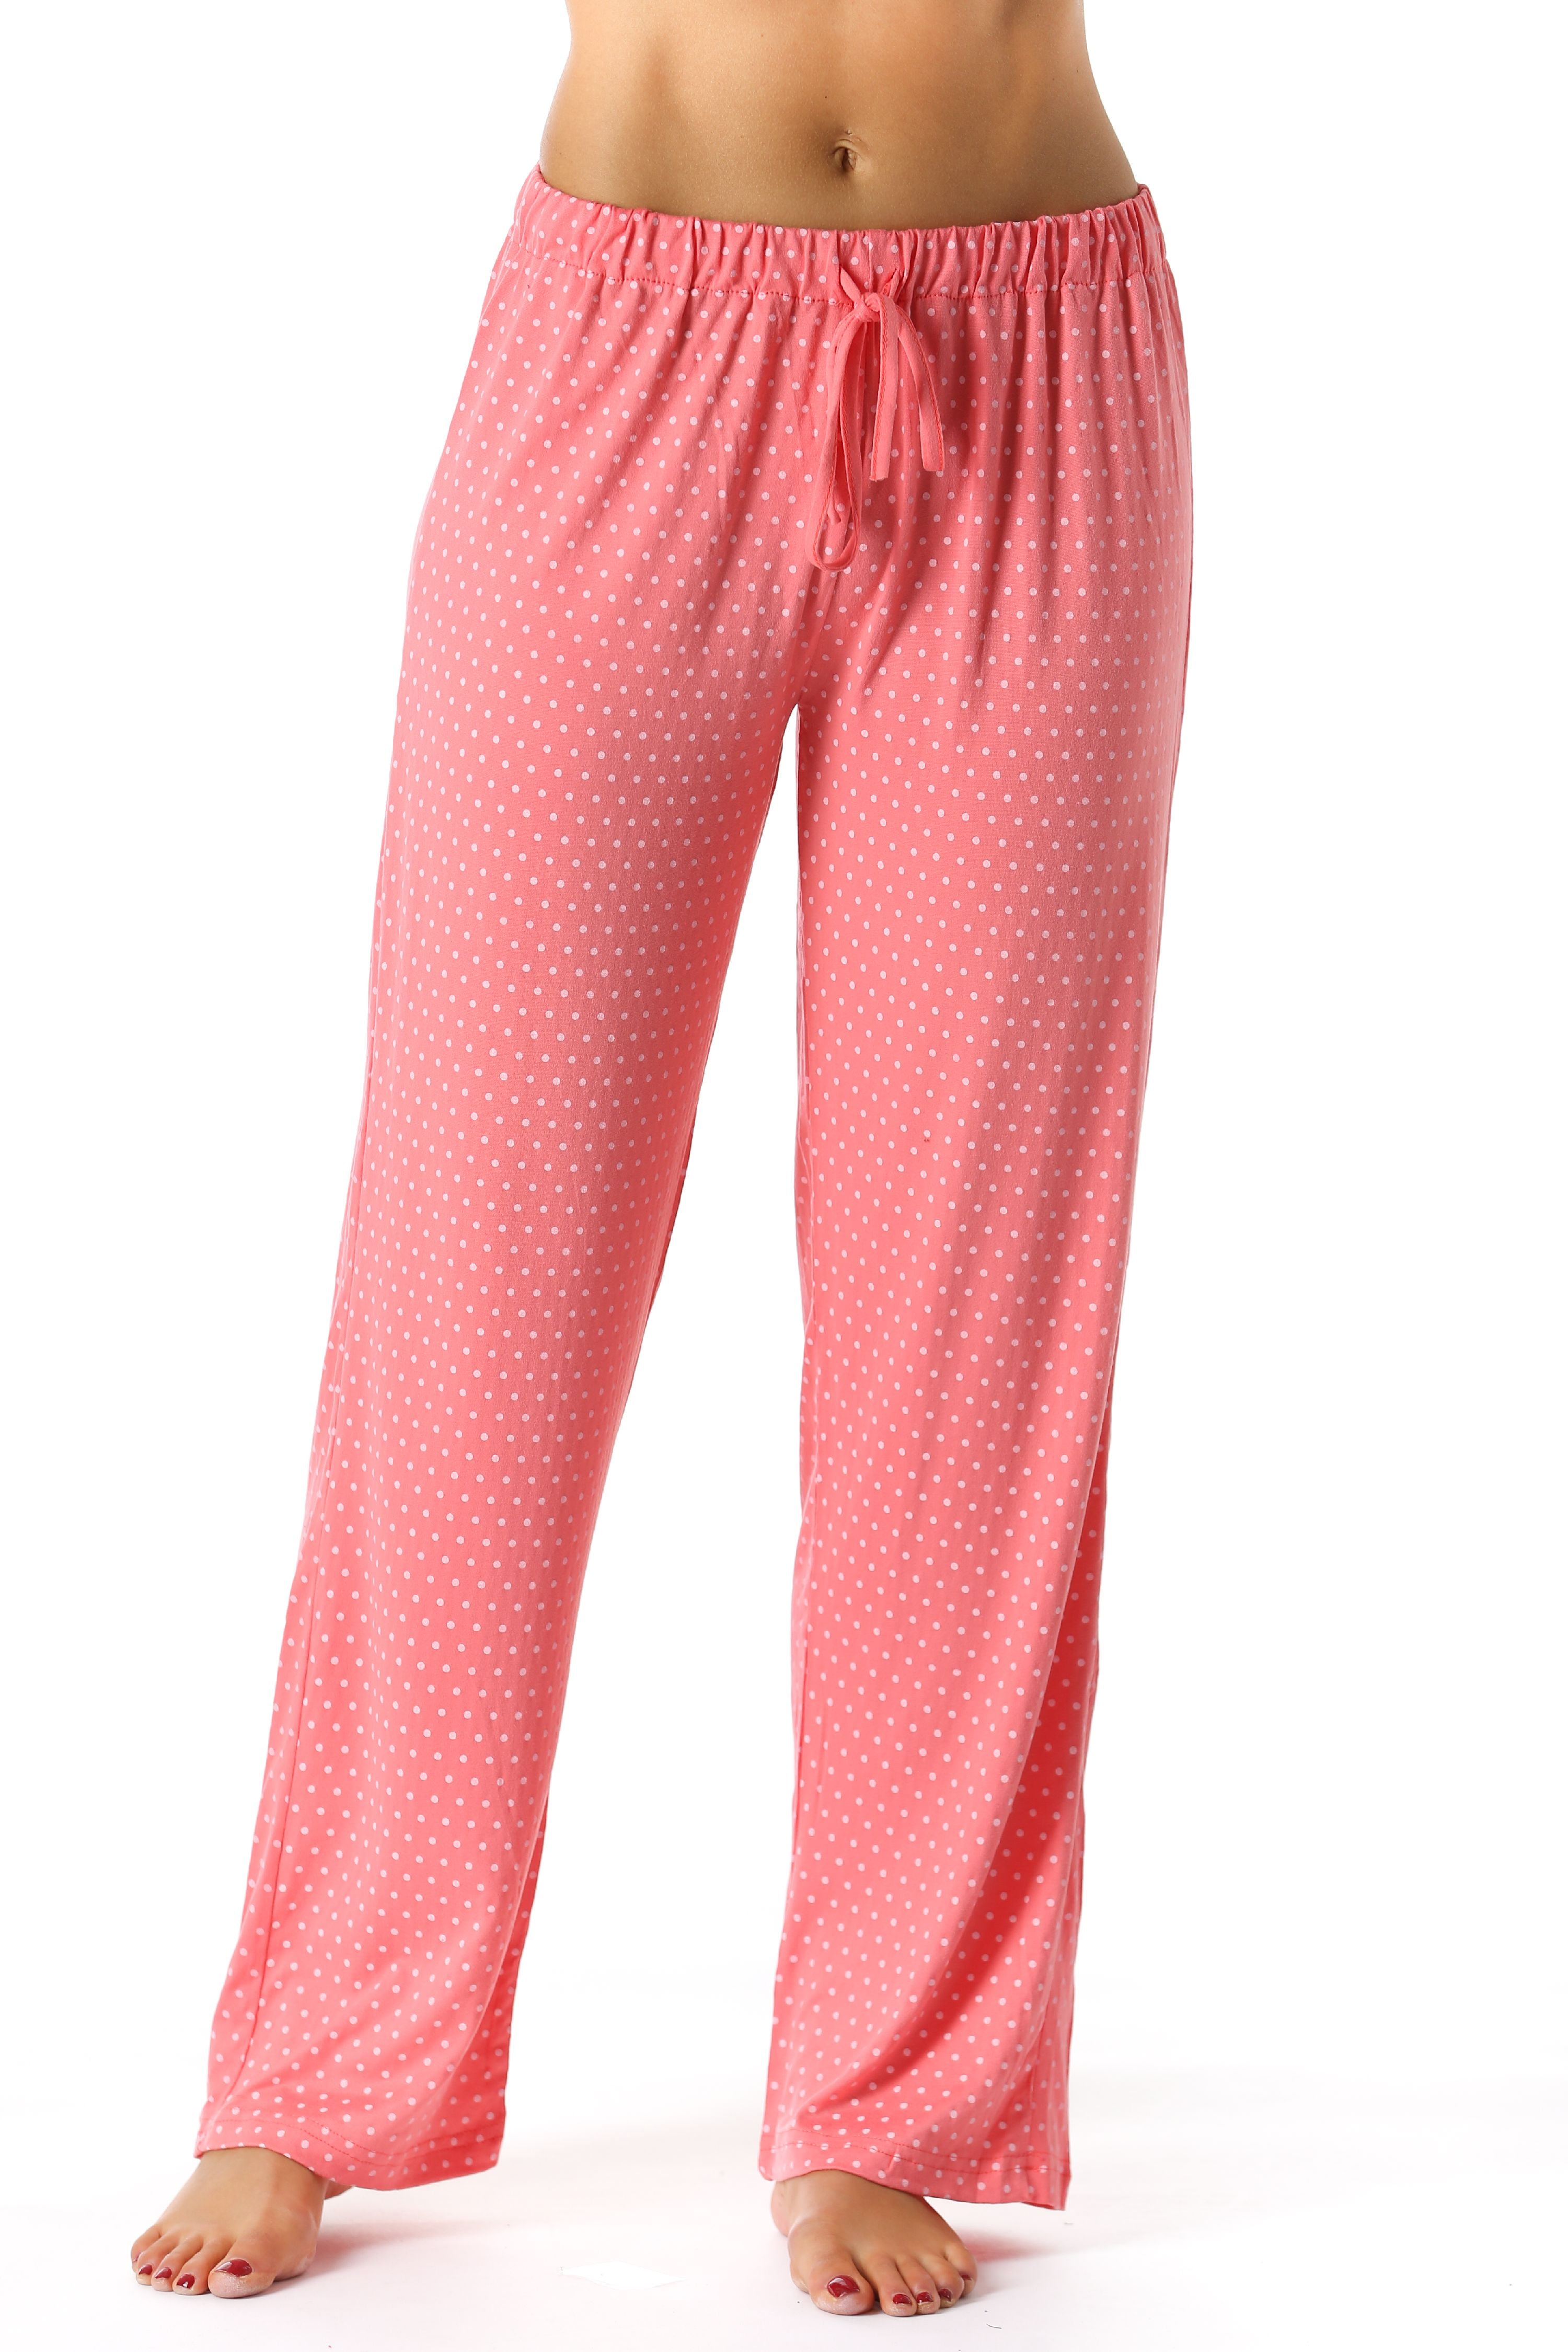 Just Love Women Pajama Pants / PJs / Sleepwear (Coral with White Dots,  Small) - Walmart.com